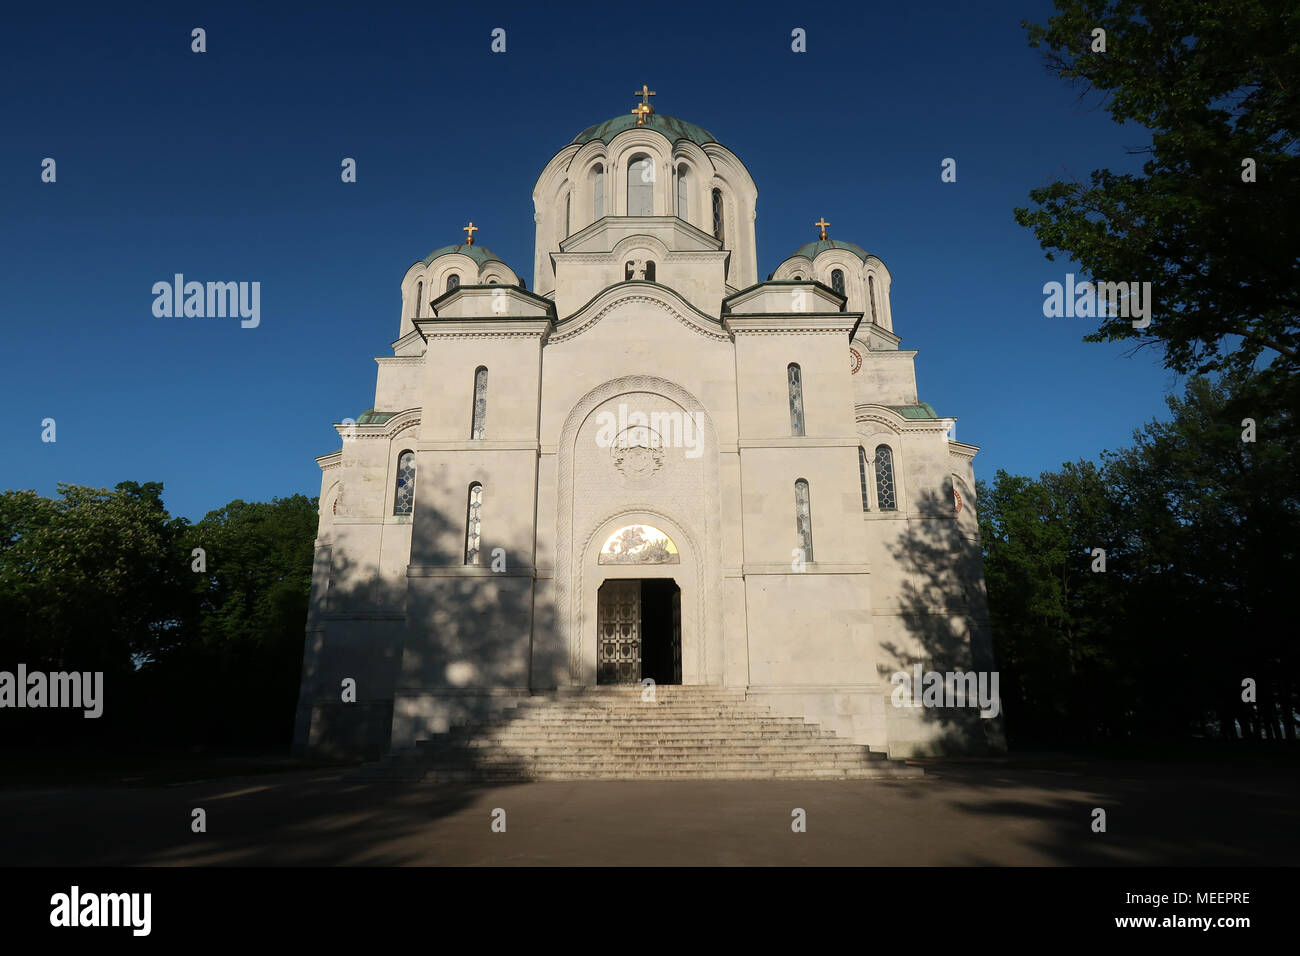 St. George church in Topola, Serbia Stock Photo